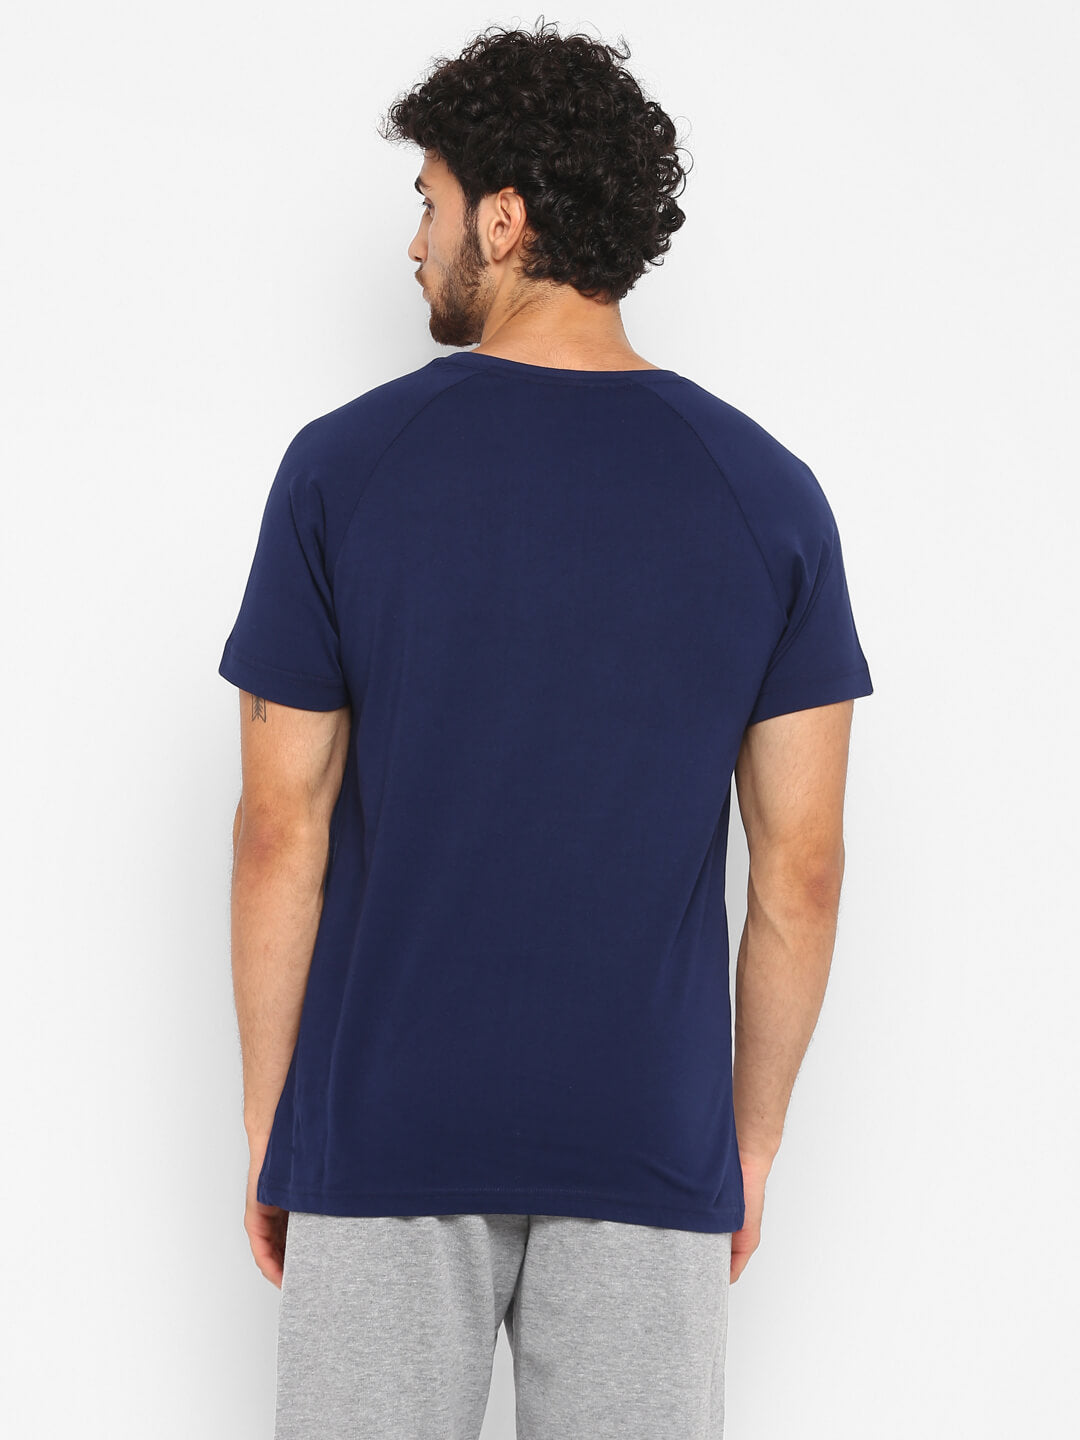 Lorenzo Blue T-Shirts for Men